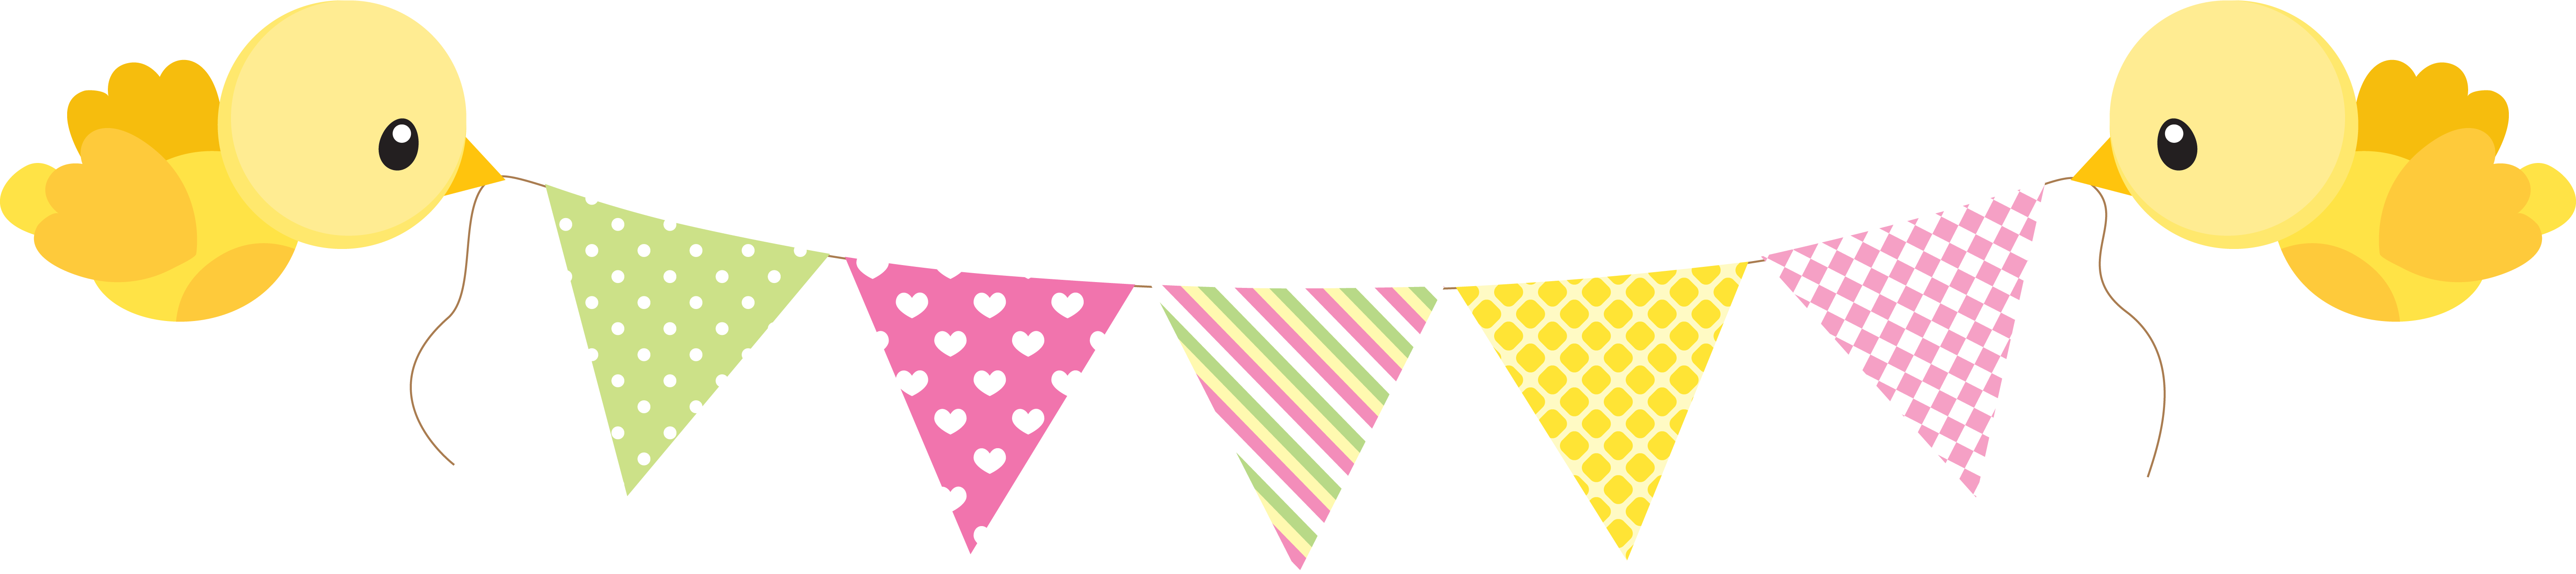 festival clipart triangle banner